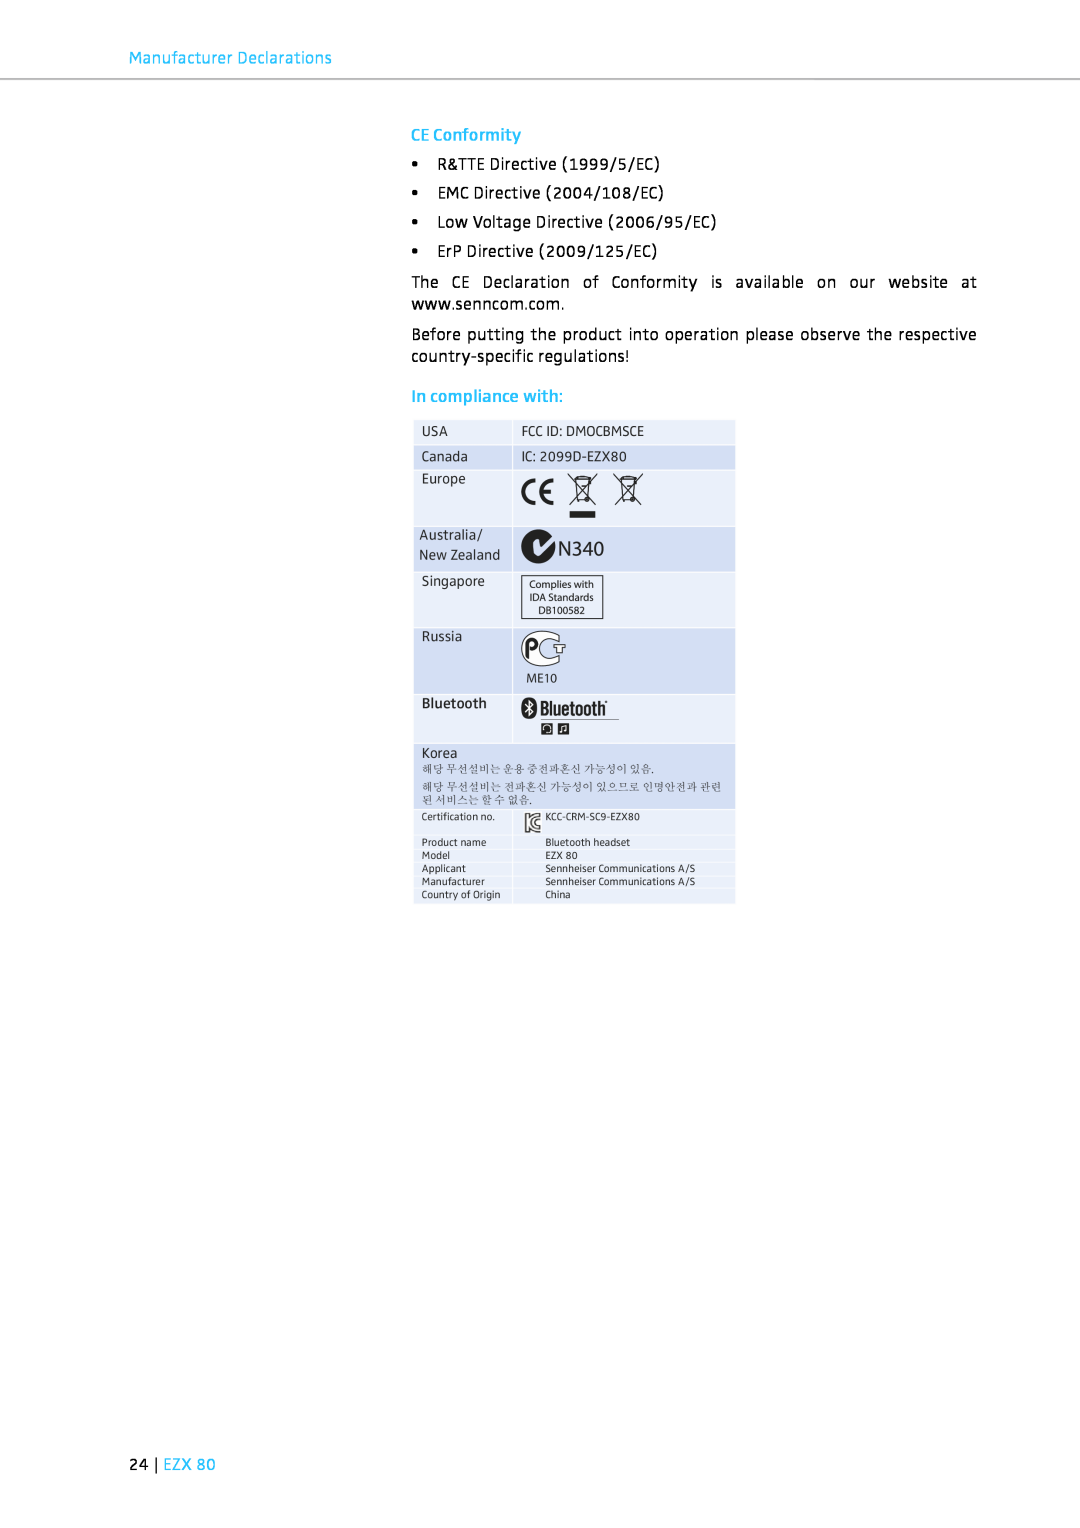 Sennheiser EZX 80 instruction manual Manufacturer Declarations CE Conformity, In compliance with, 24 | EZX 